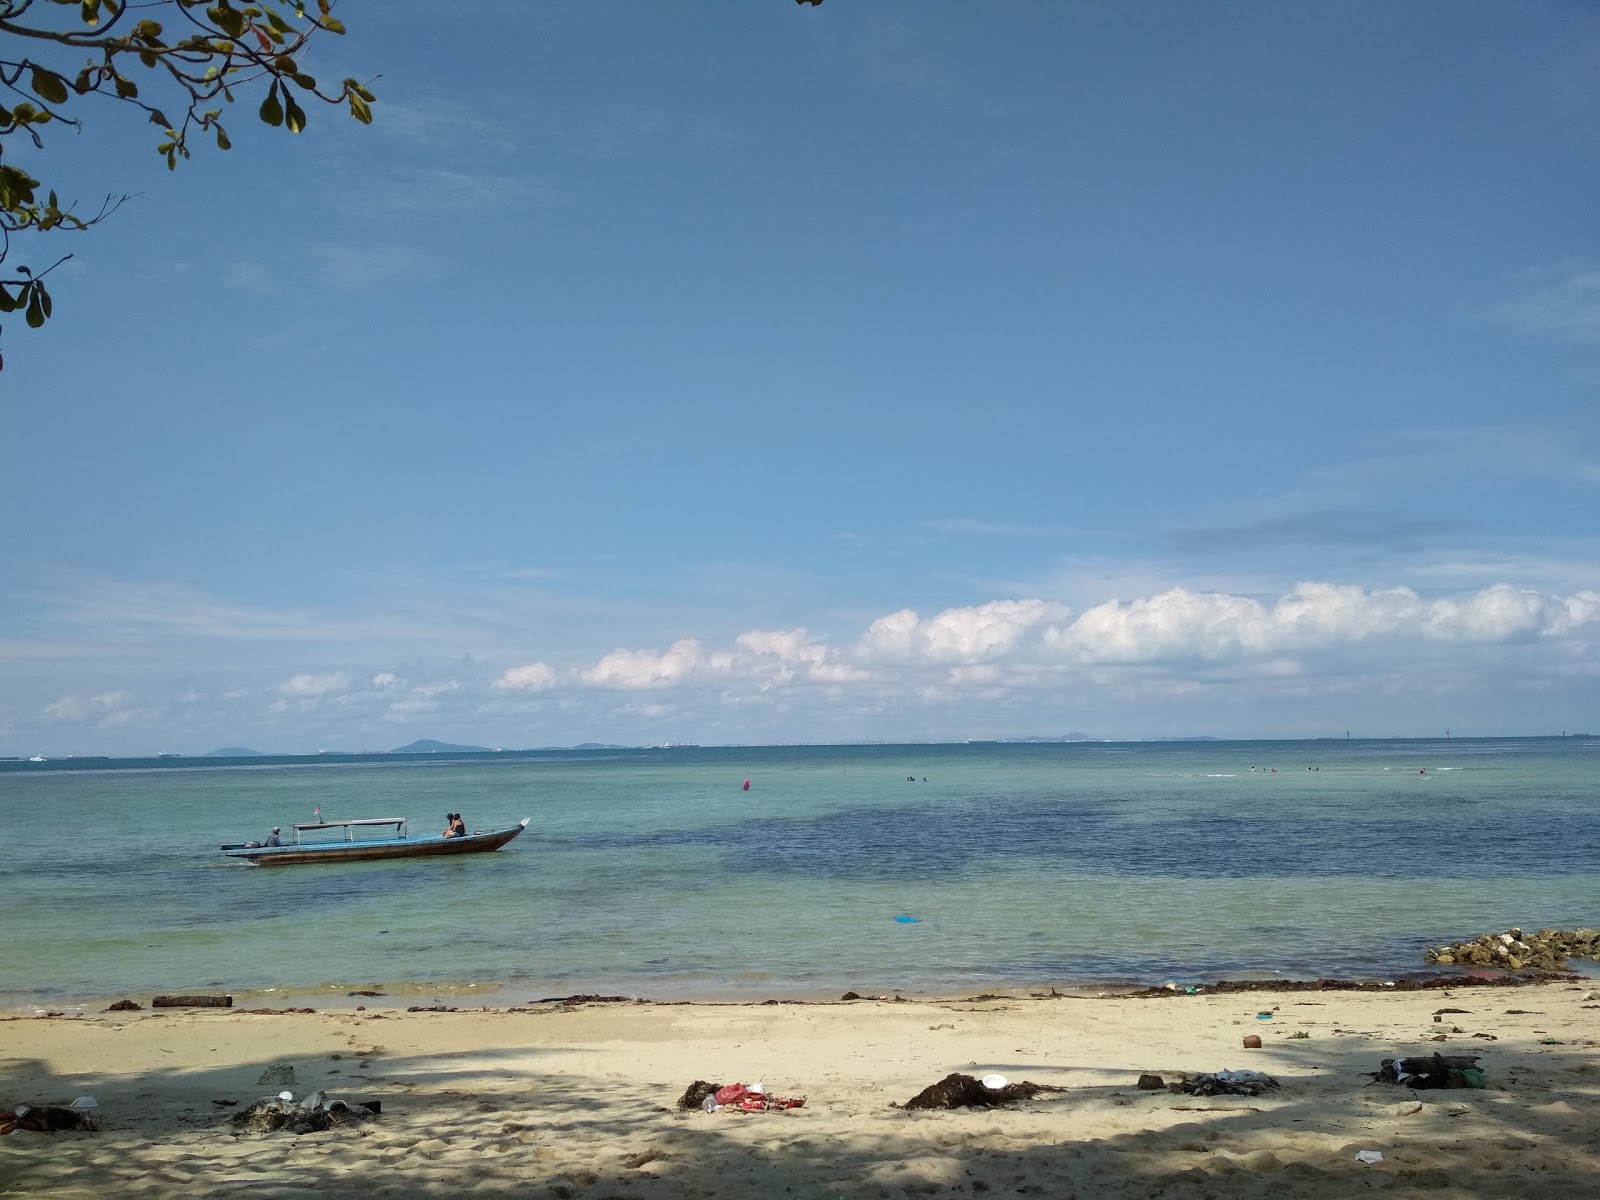 Foto af Nongsa Riau Beach - populært sted blandt afslapningskendere